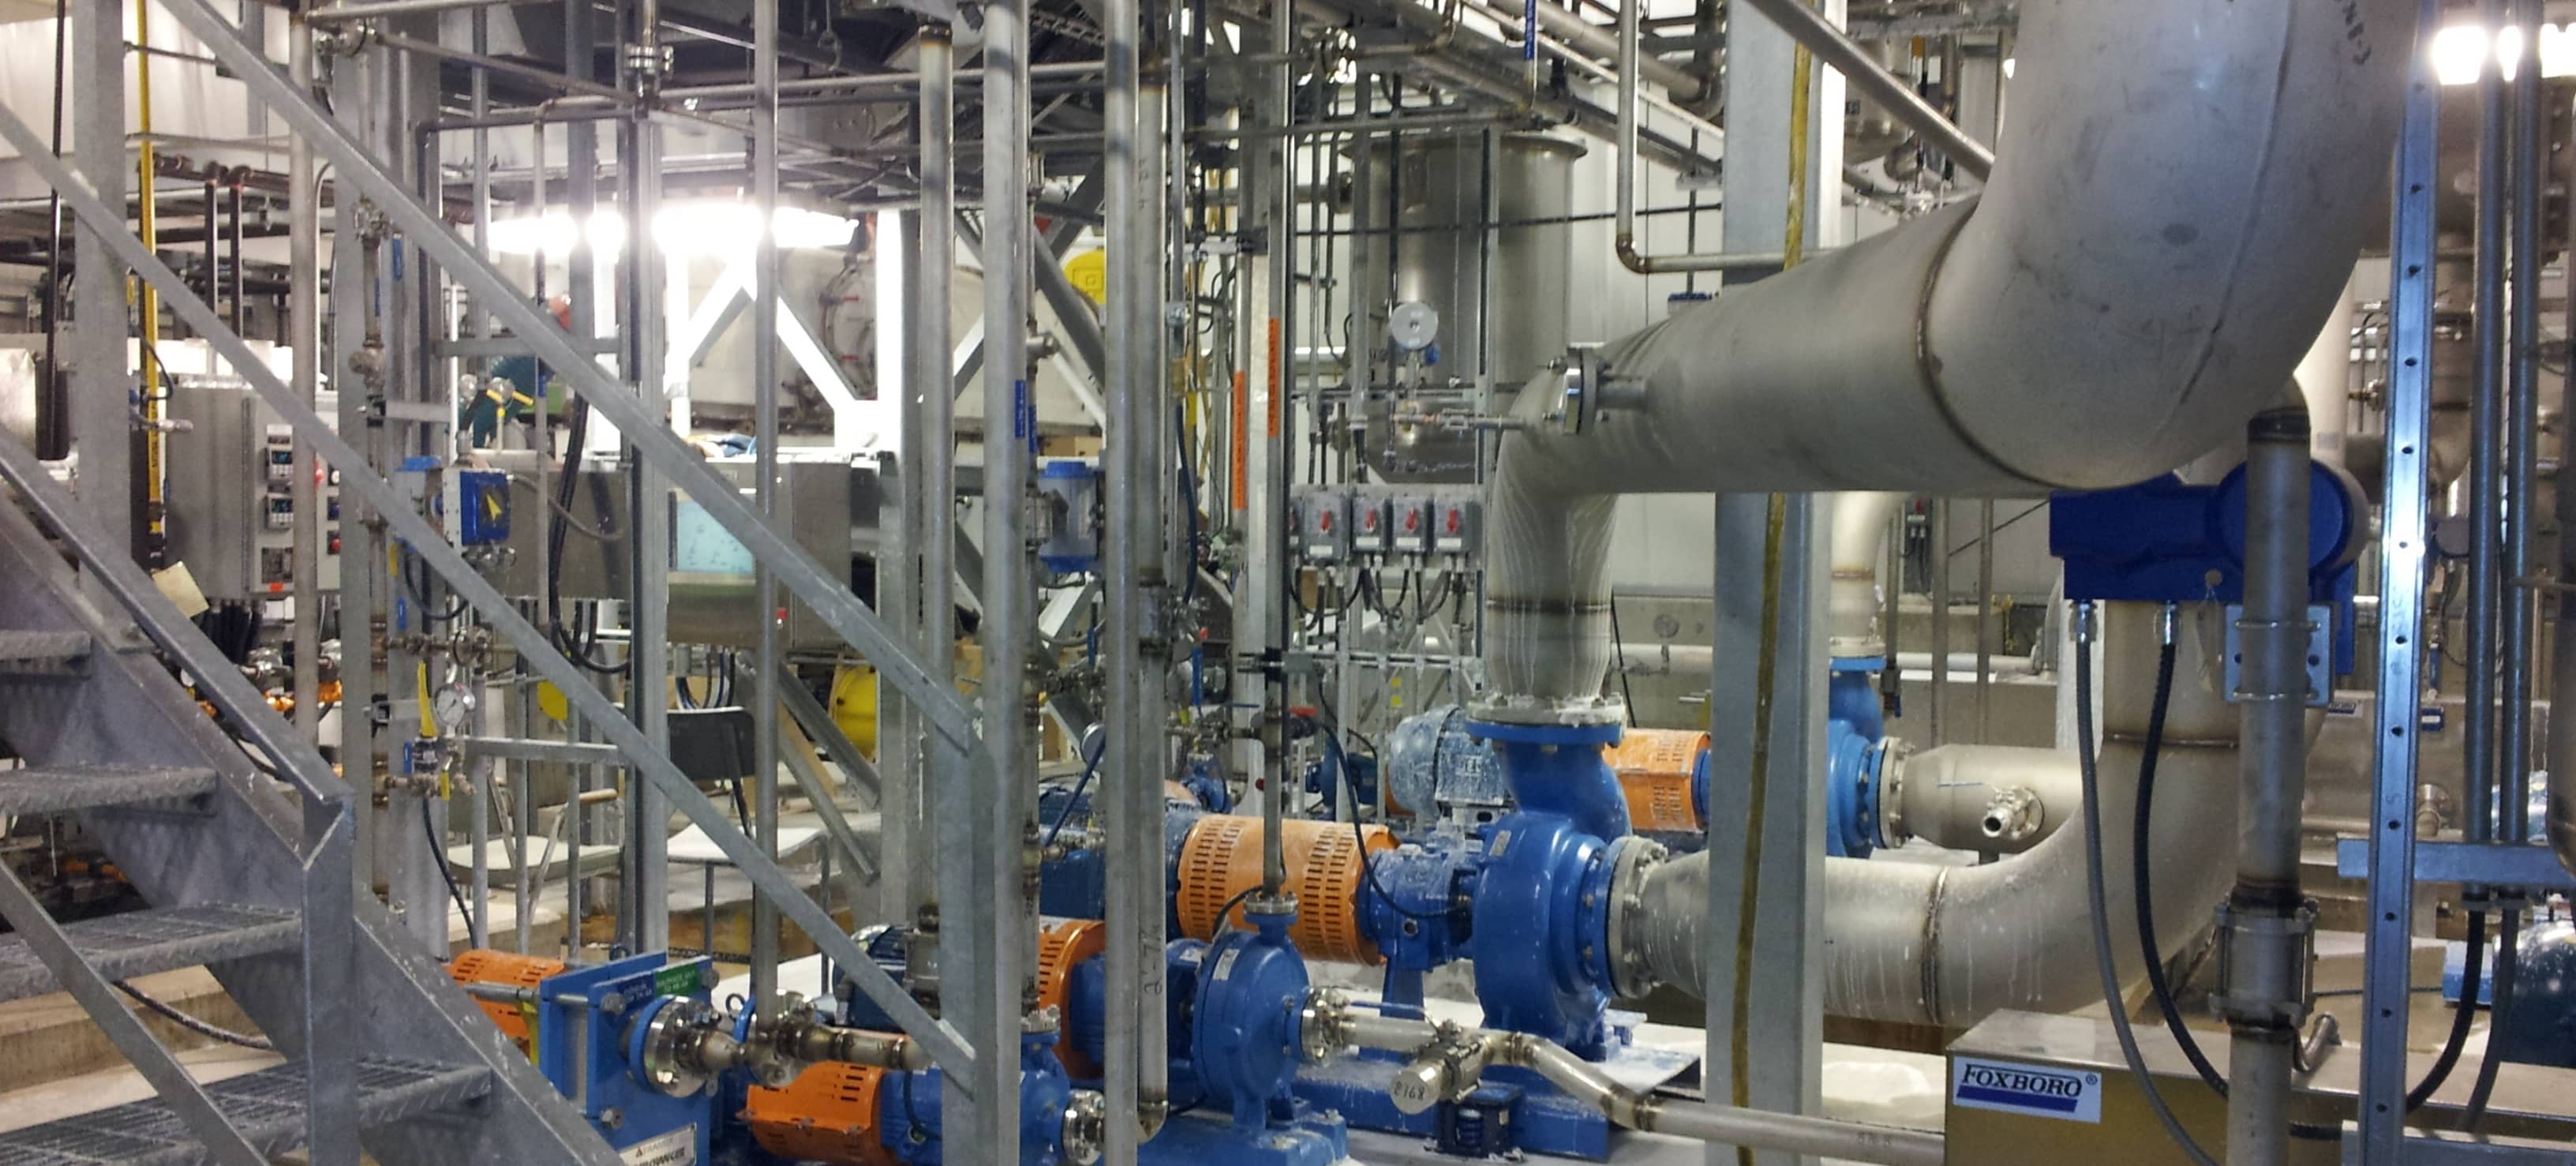 Distillation Equipment: Applications & Uses